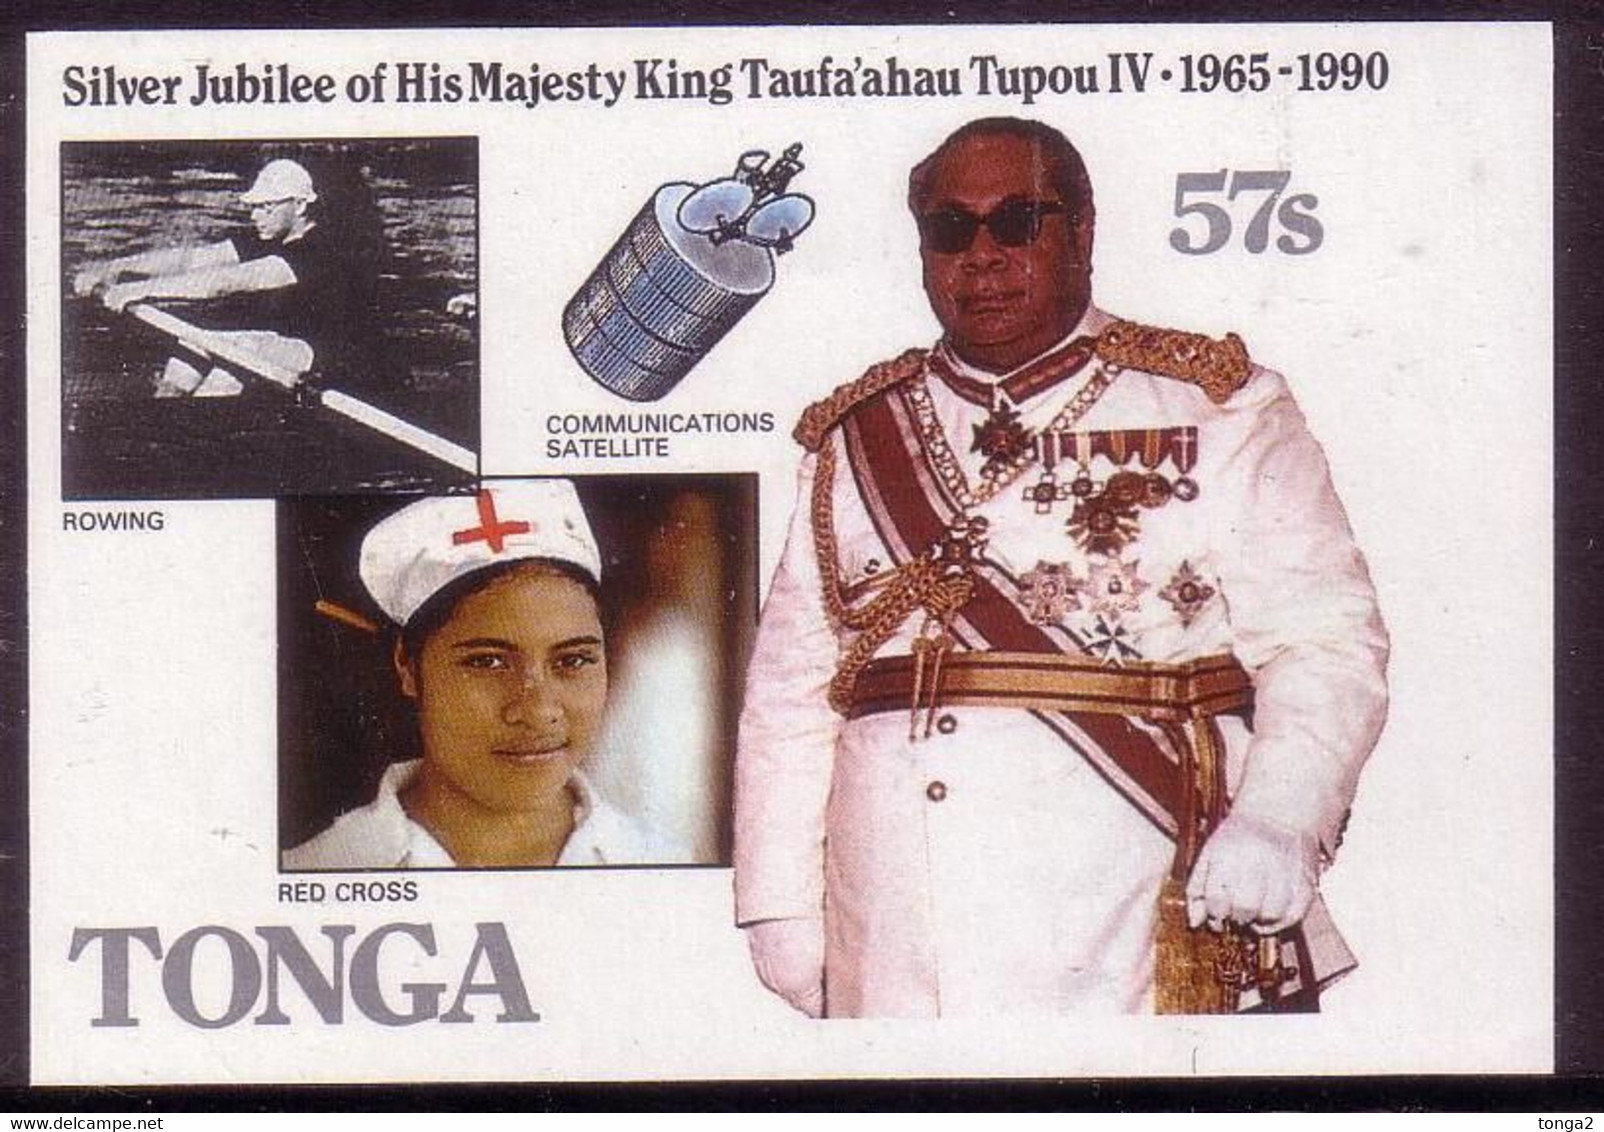 Tonga 1988 -  Imperf Plate Proof - Satellite - Space - Oceania